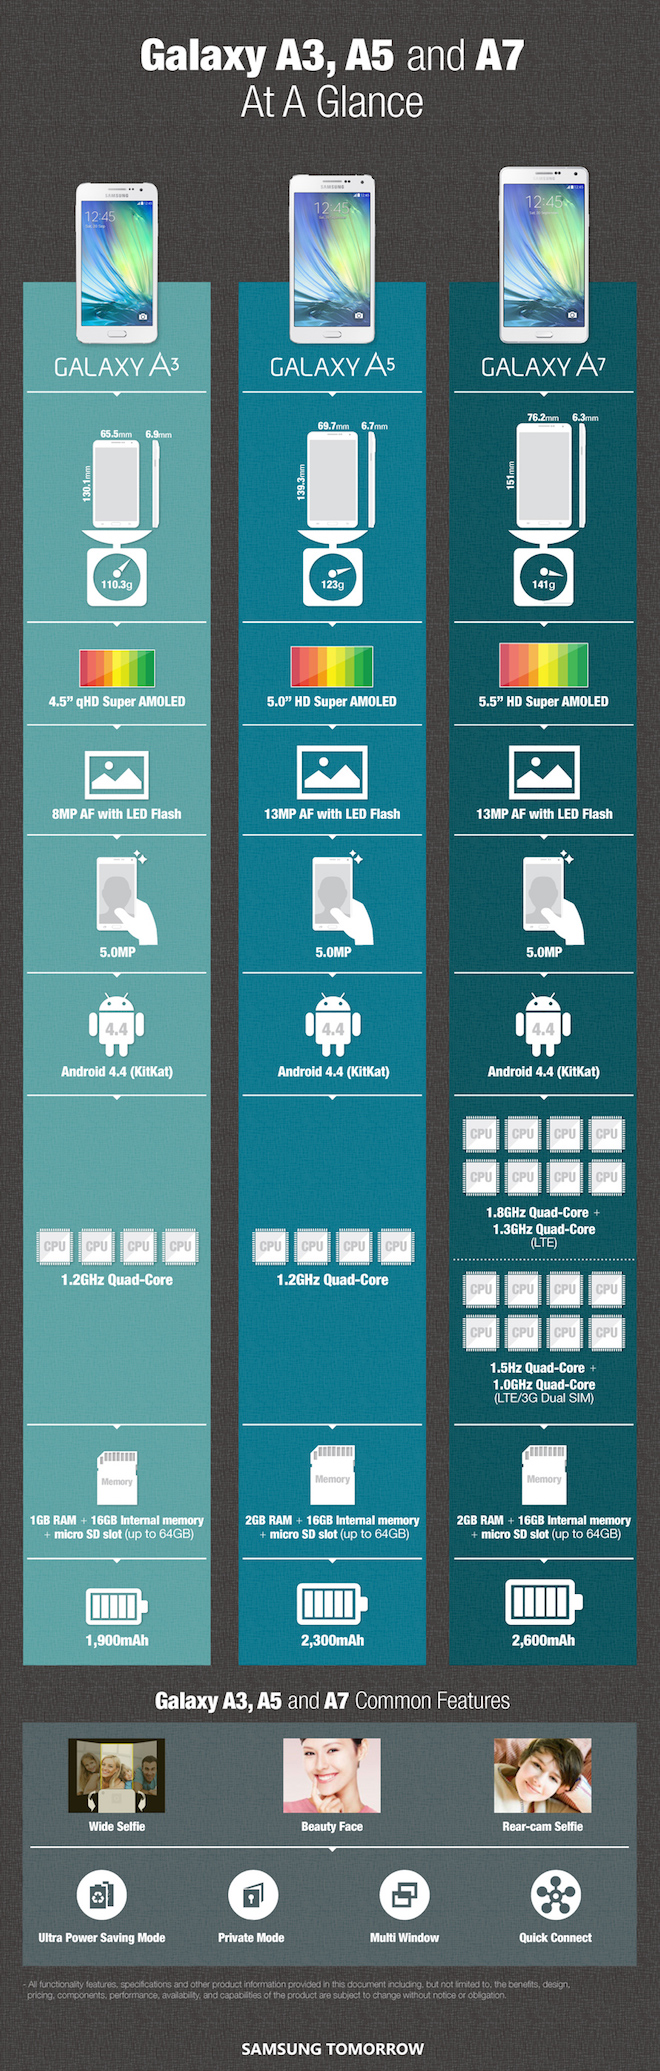 Samsung Galaxy A3 A5 A7 infographic